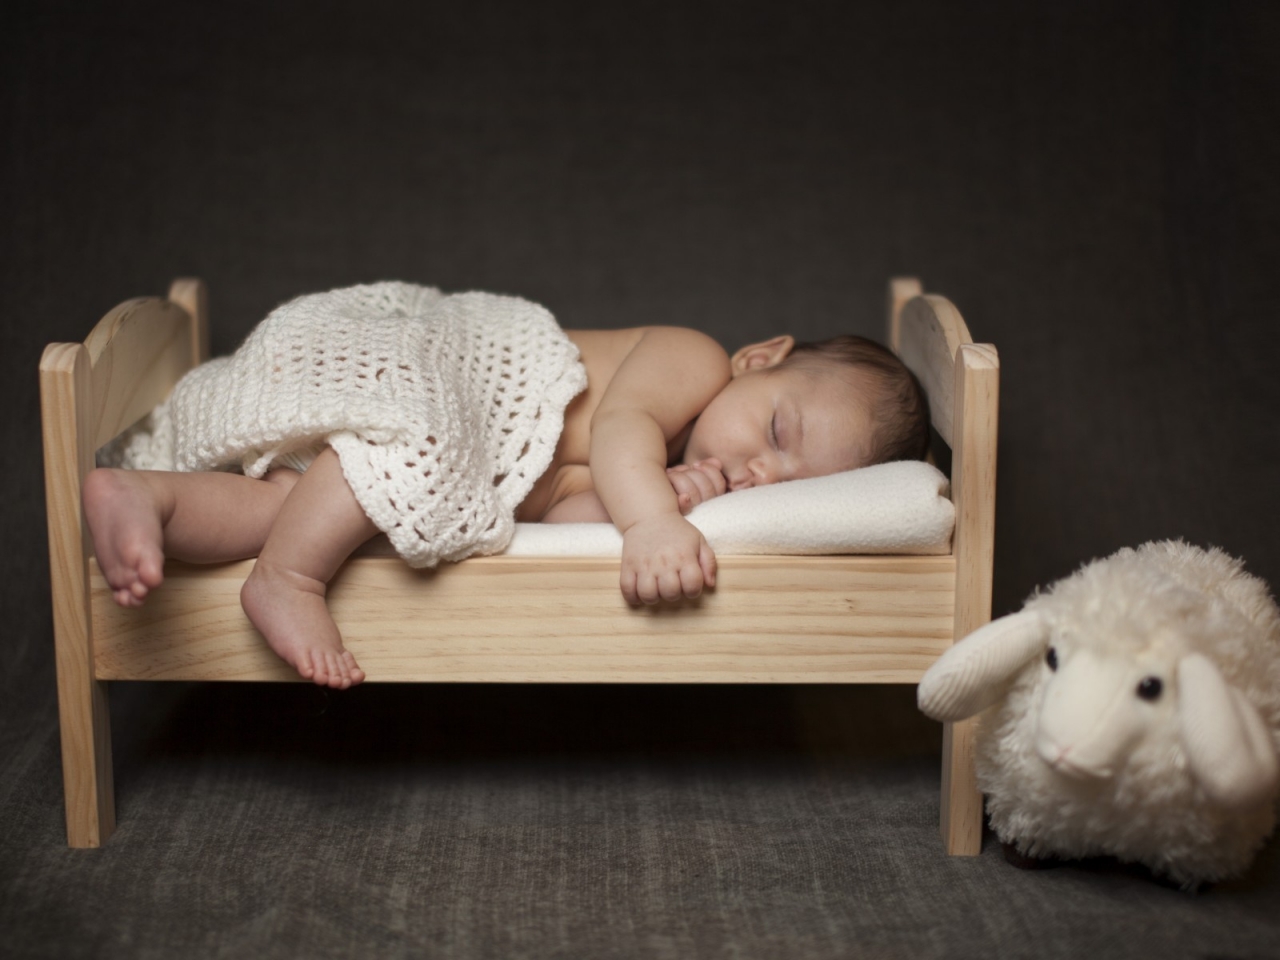 Baby Boy Sleeping for 1280 x 960 resolution